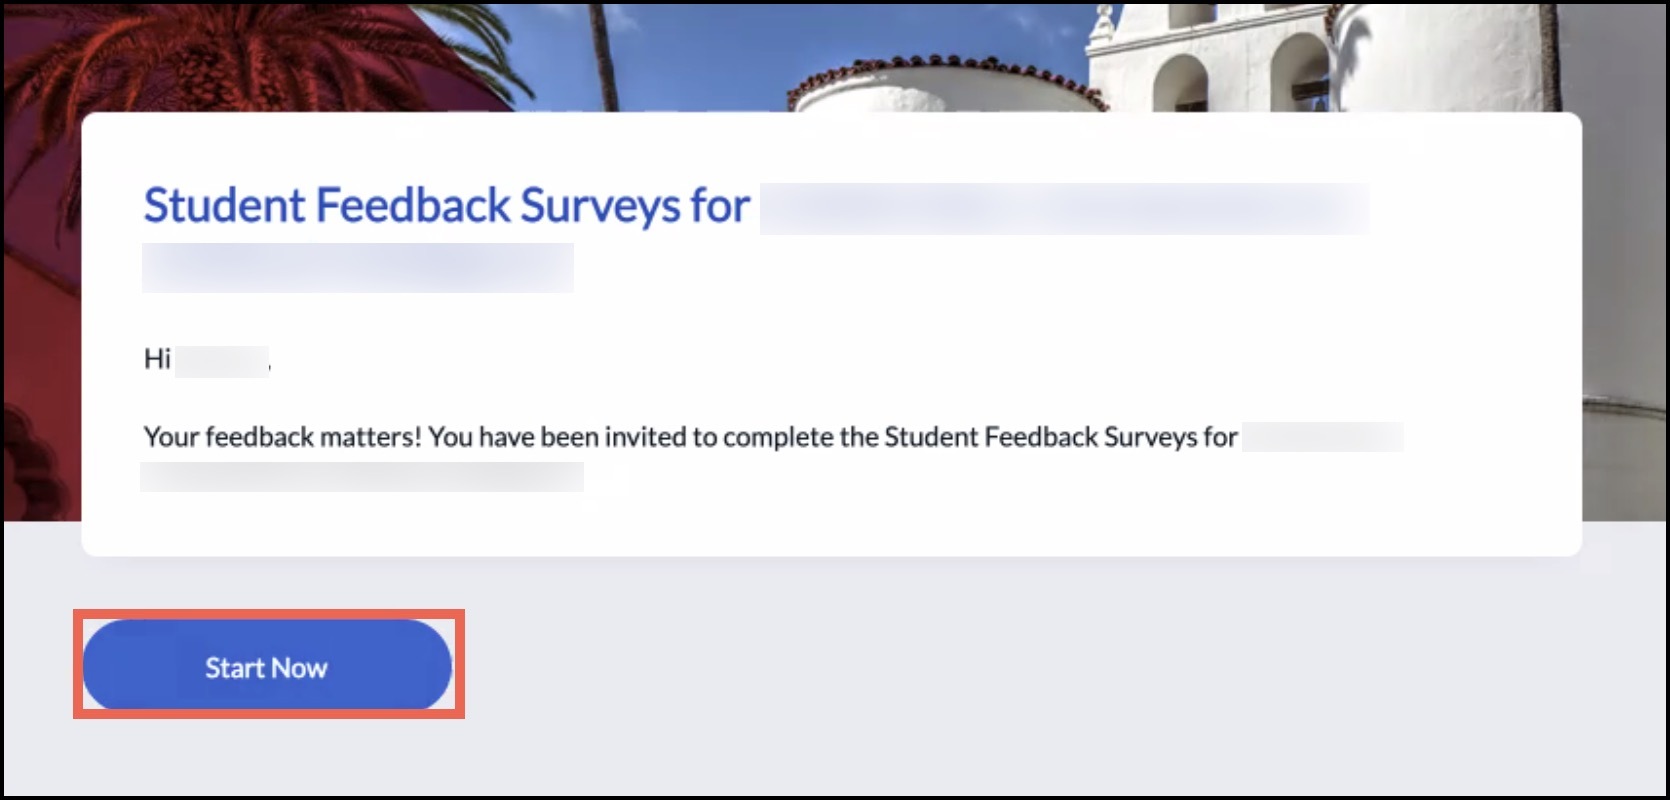 Student Feedback Survey introduction window